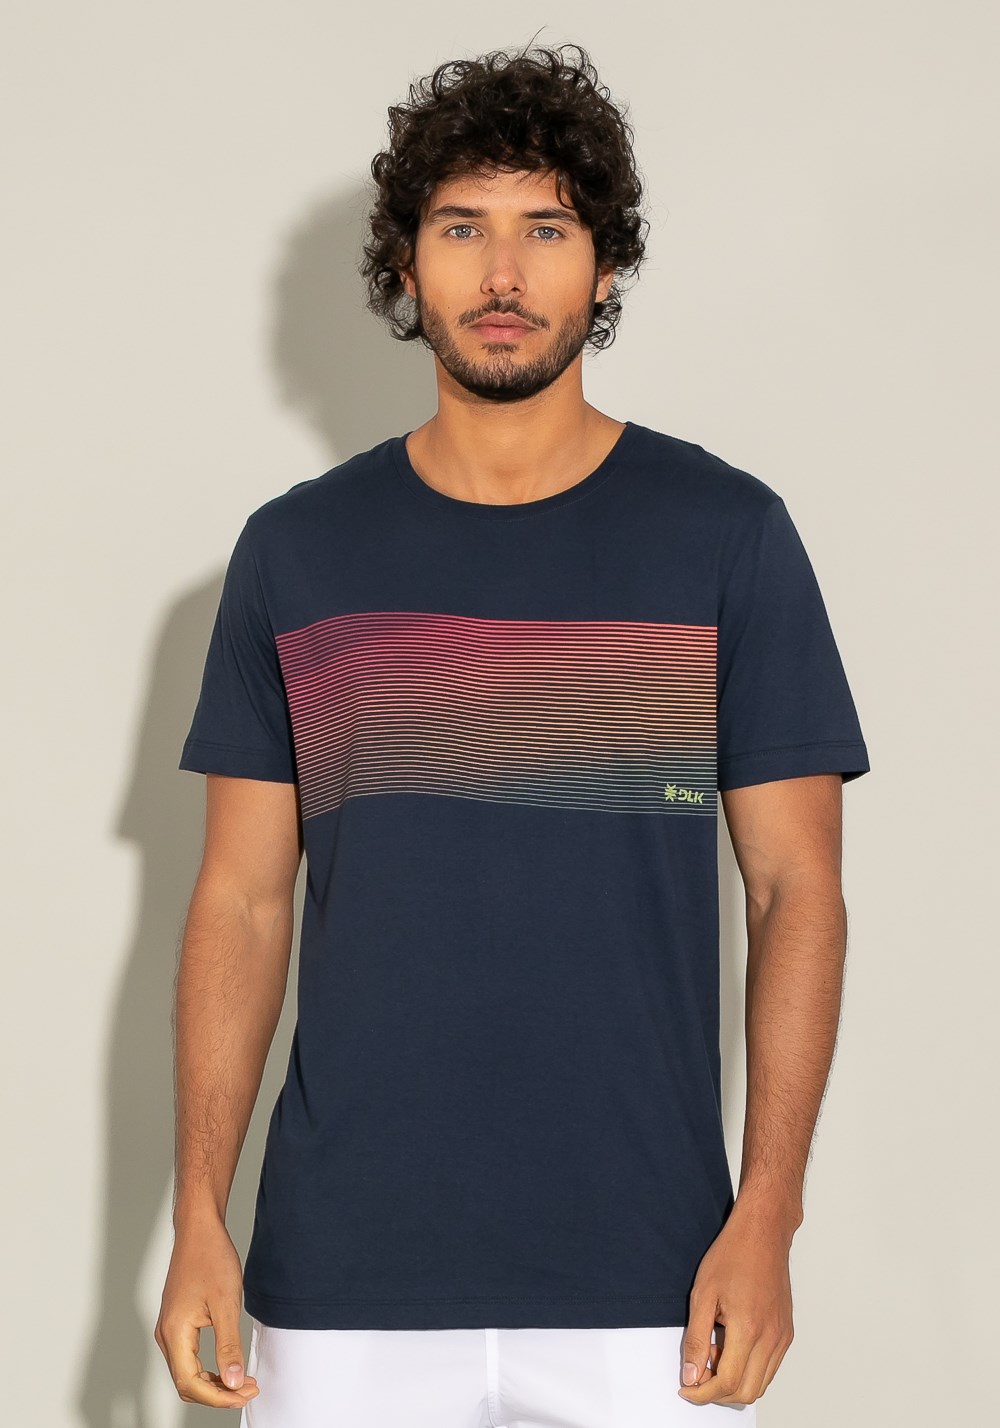 Camiseta manga curta for men wave azul marinho